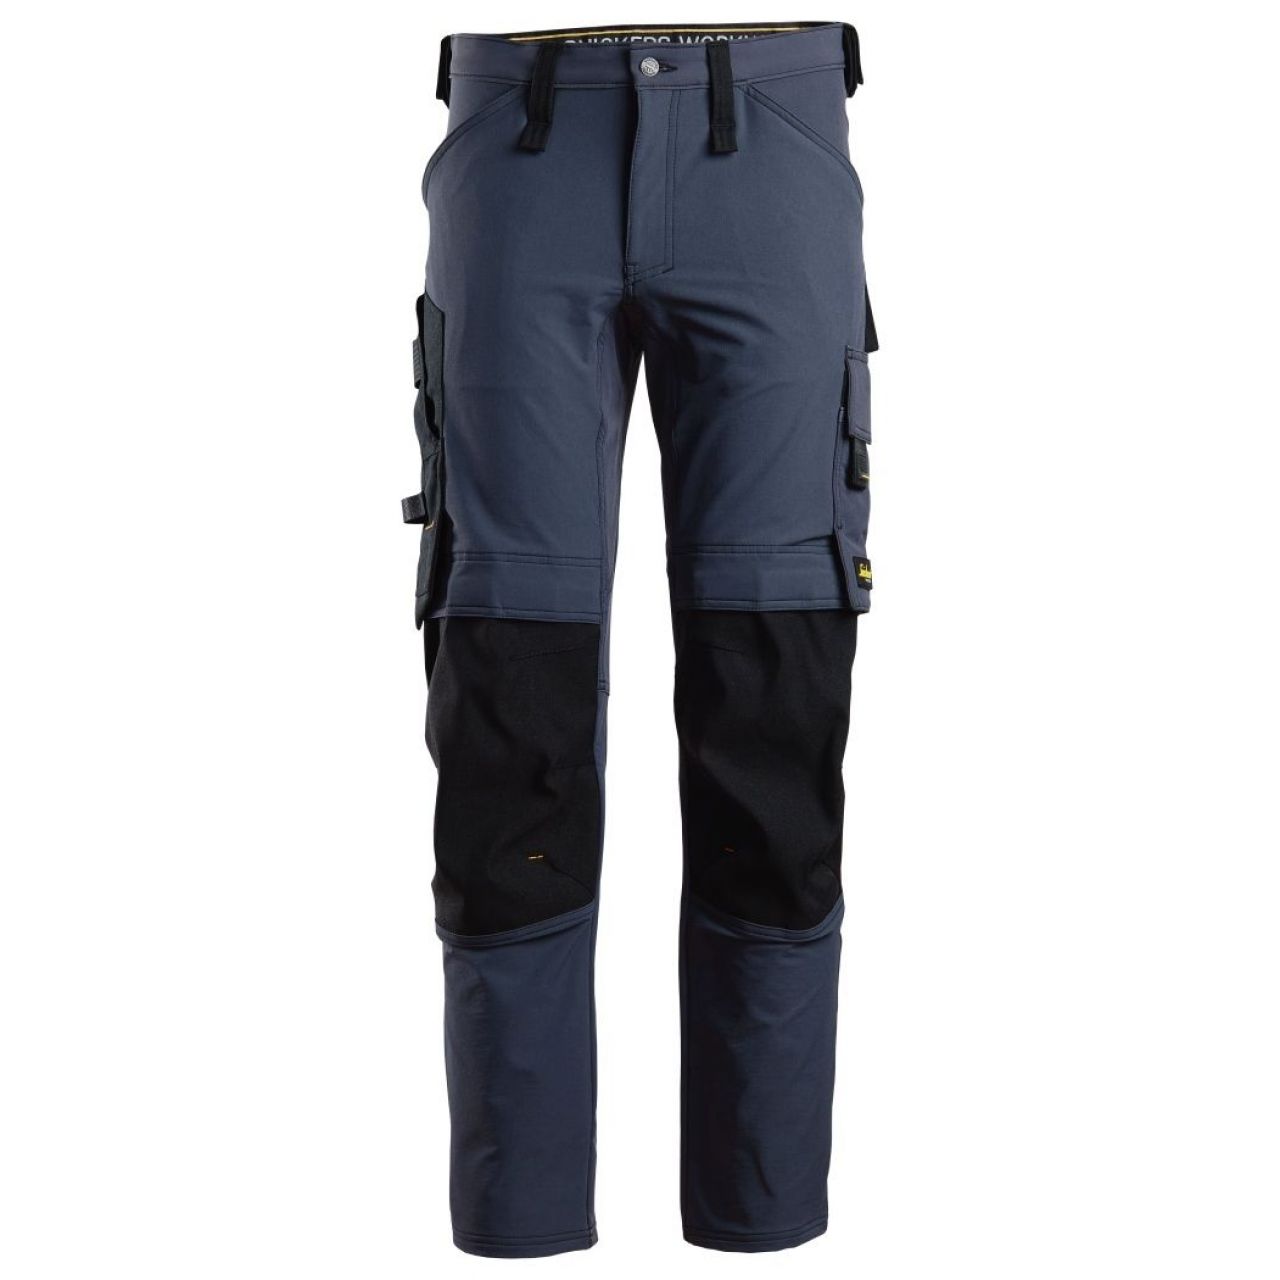 Pantalon elastico AllroundWork azul marino-negro talla 162